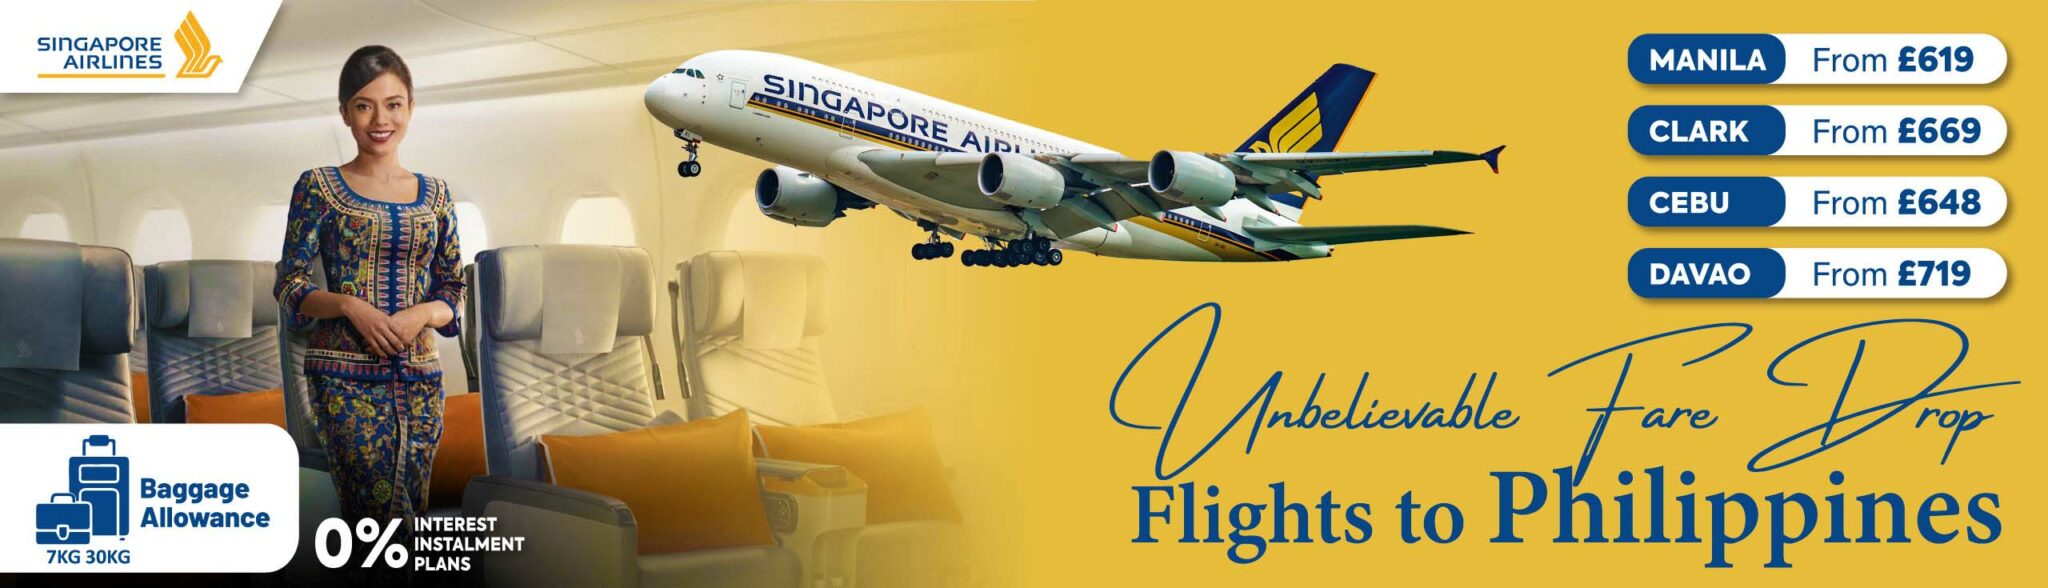 SINGAPORE-AIRLINES-2